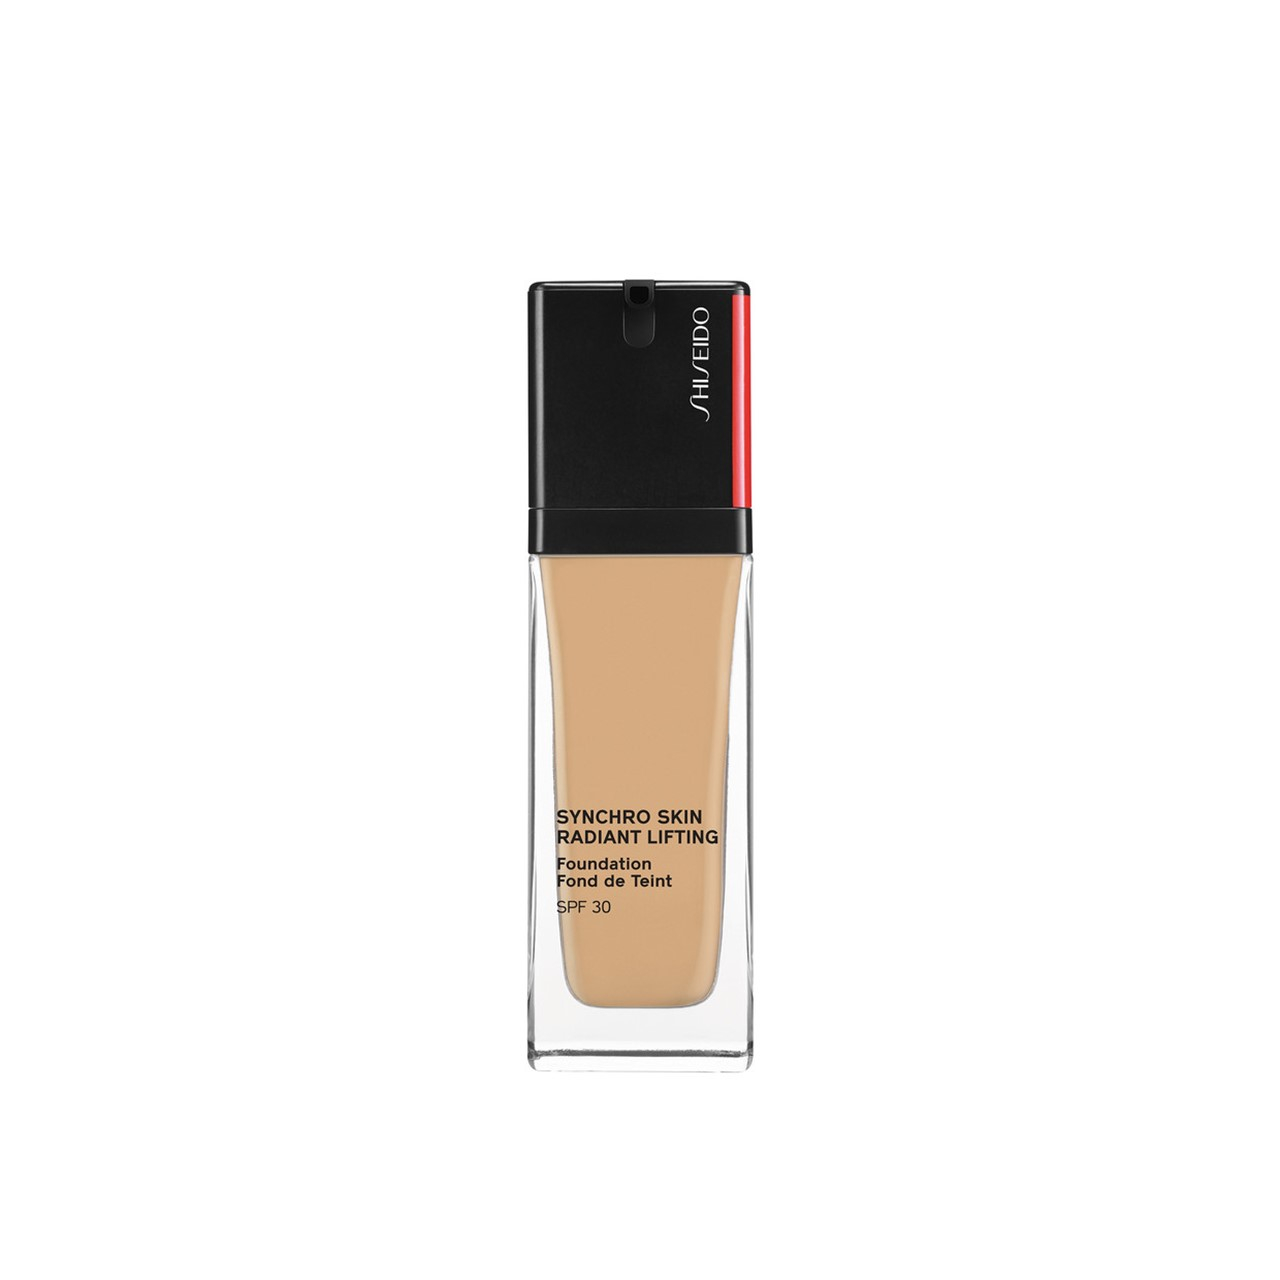 Shiseido Synchro Skin Radiant Lifting Foundation SPF30 330 Bamboo 30ml (1.01fl oz)